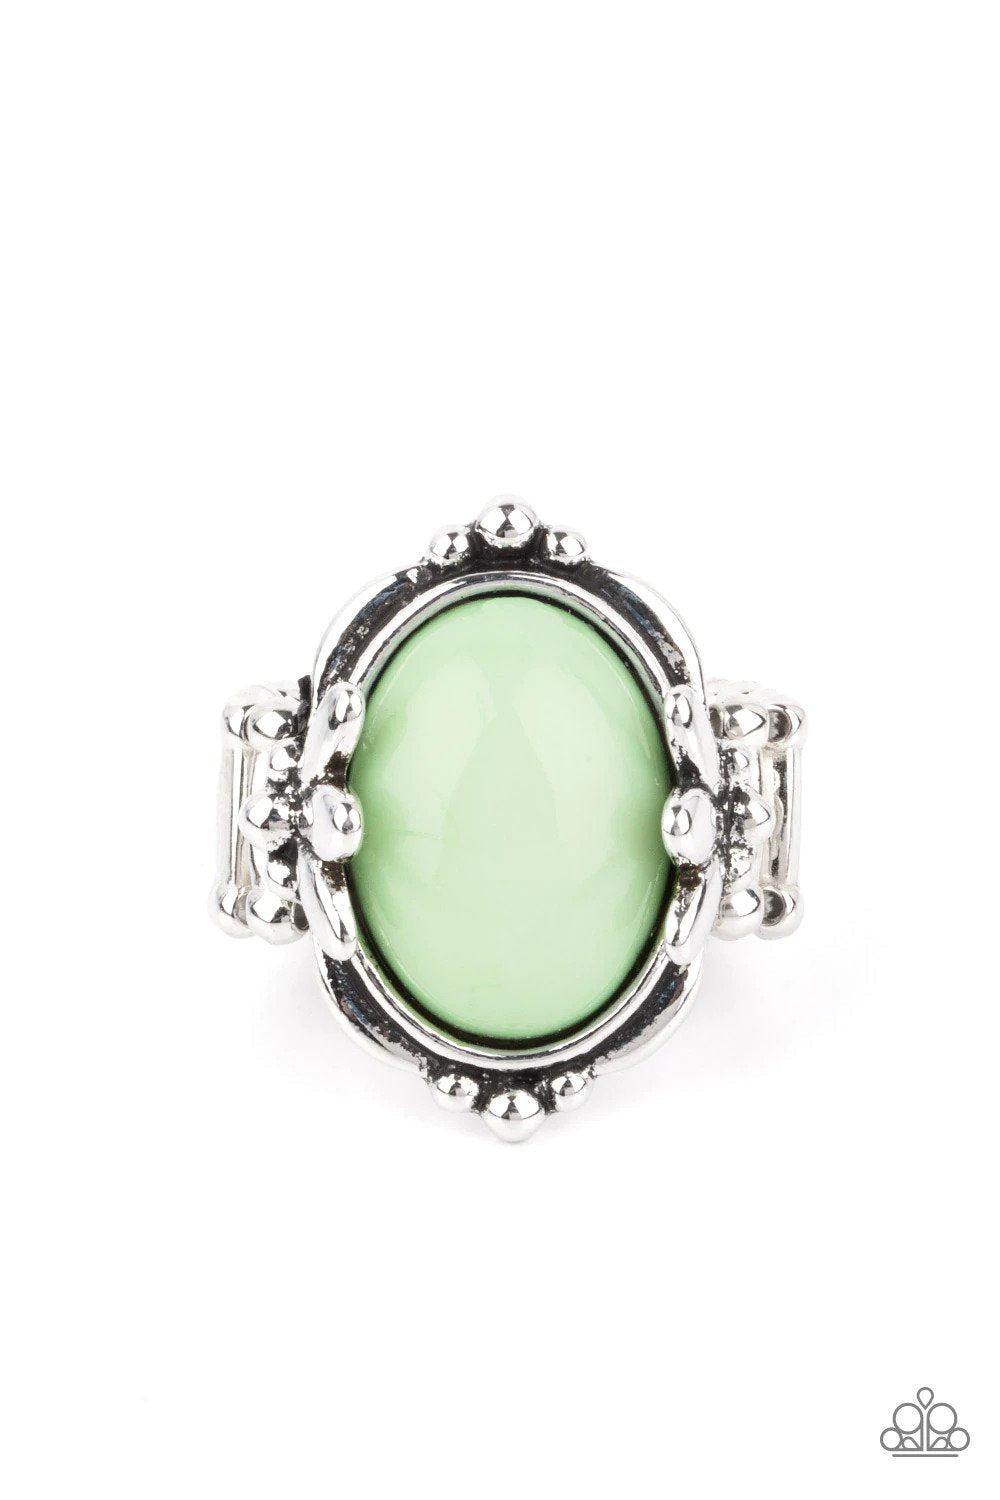 Springtime Splendor Green Ring - Paparazzi Accessories- lightbox - CarasShop.com - $5 Jewelry by Cara Jewels